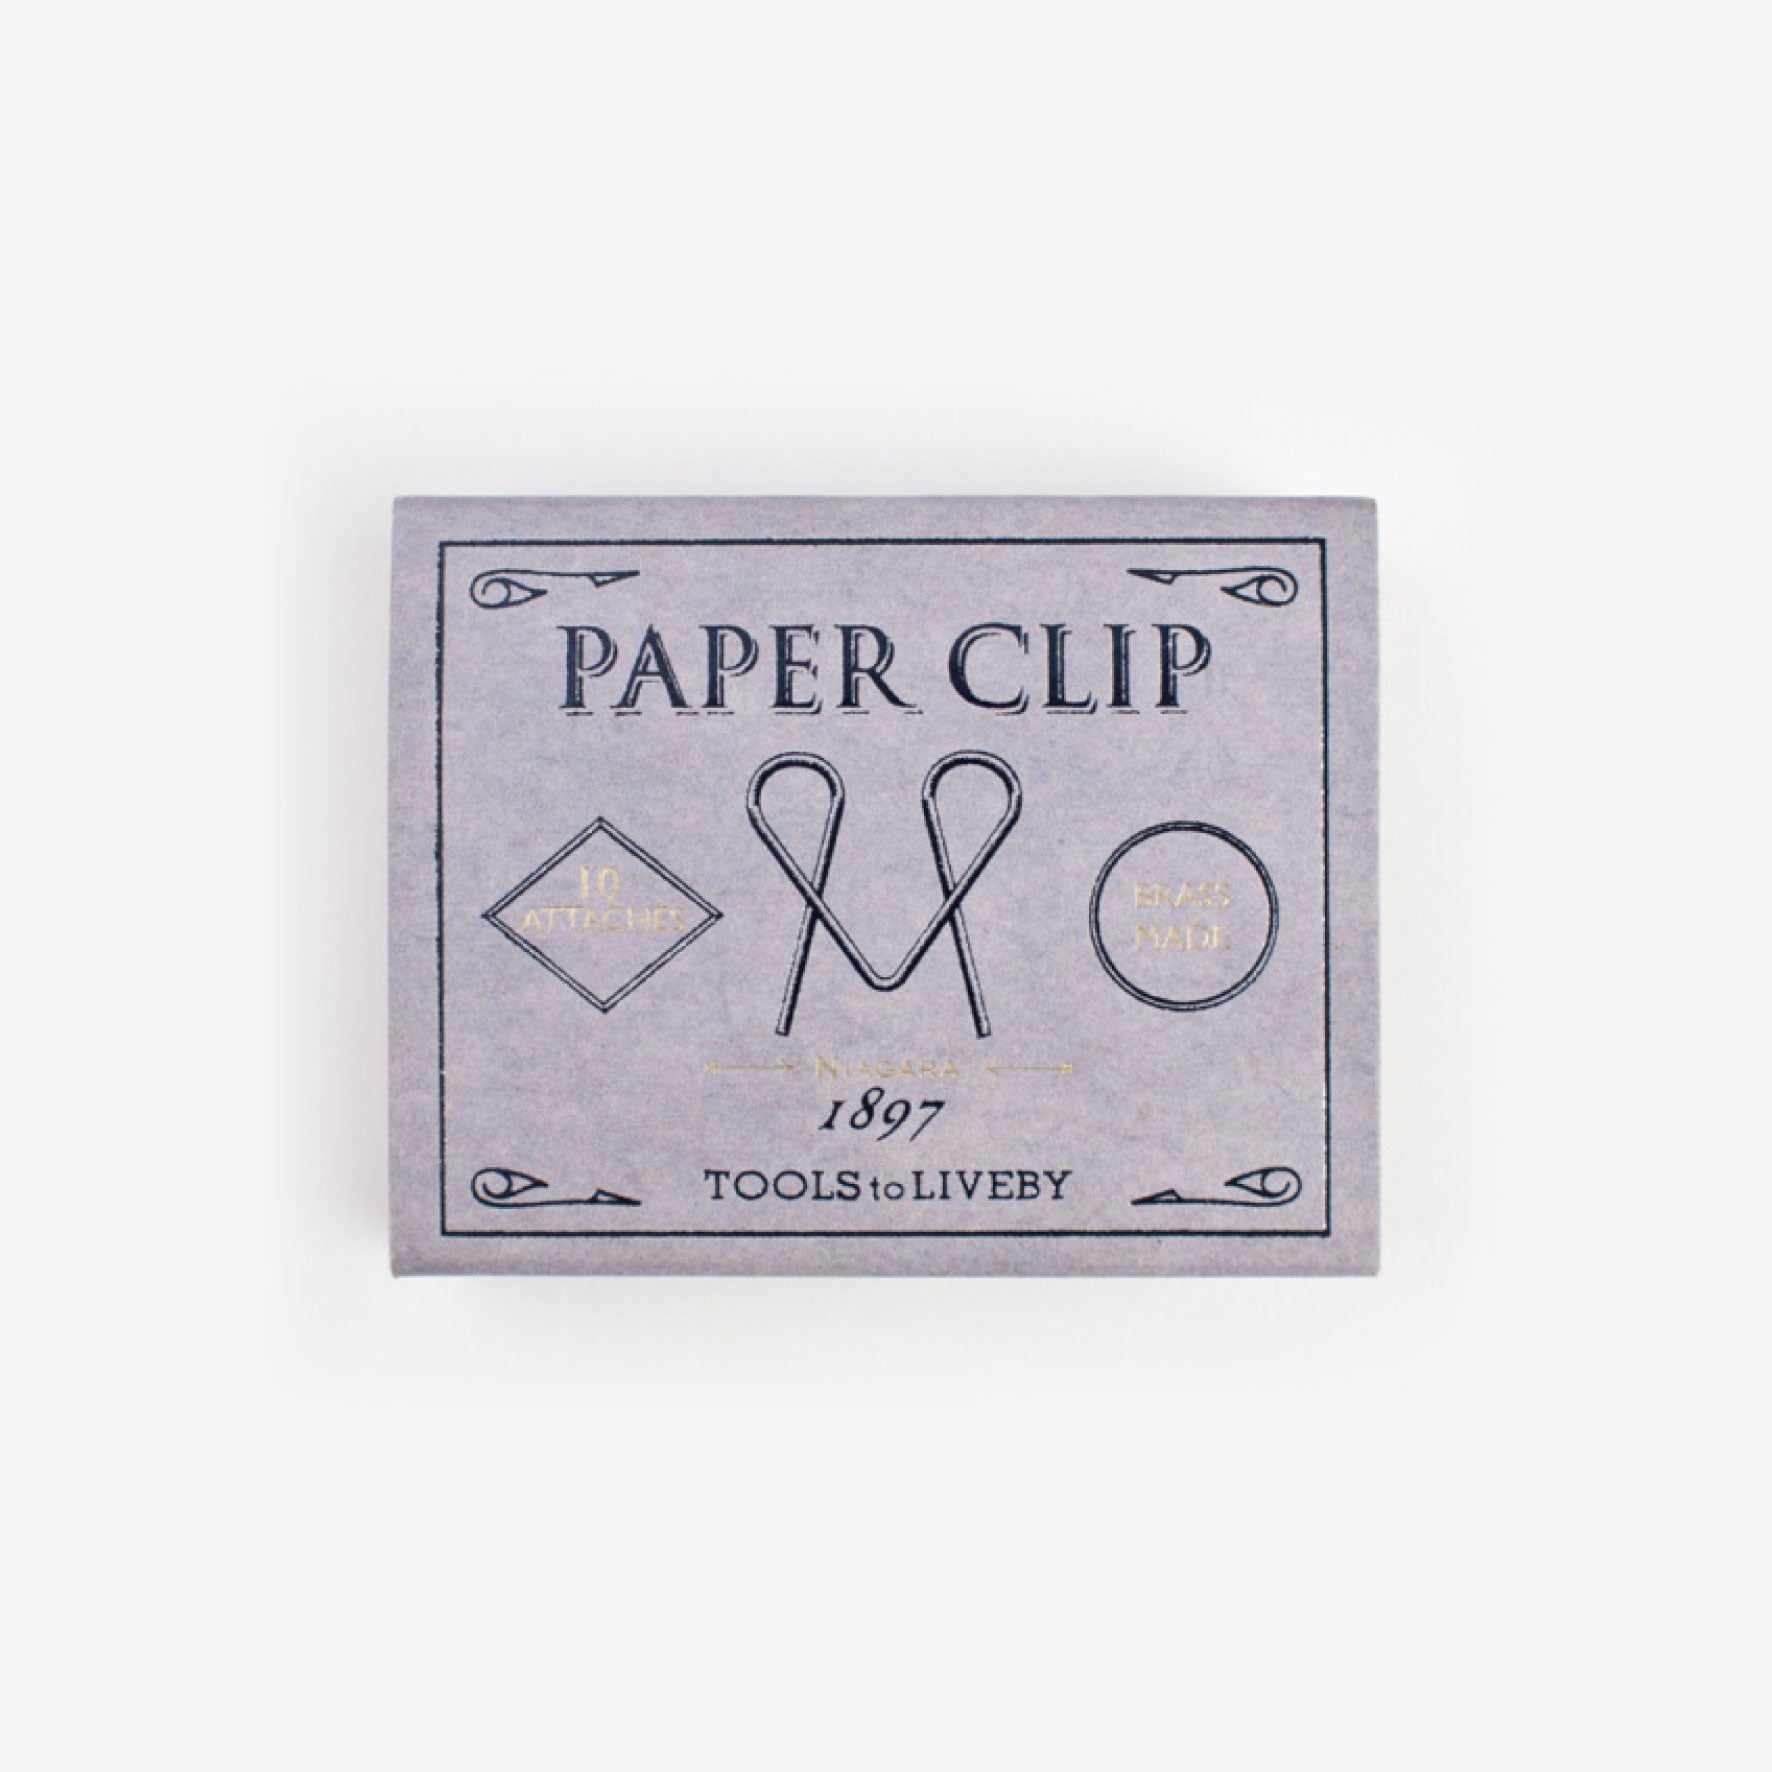 Tools to Liveby - Paper Clips - Niagara